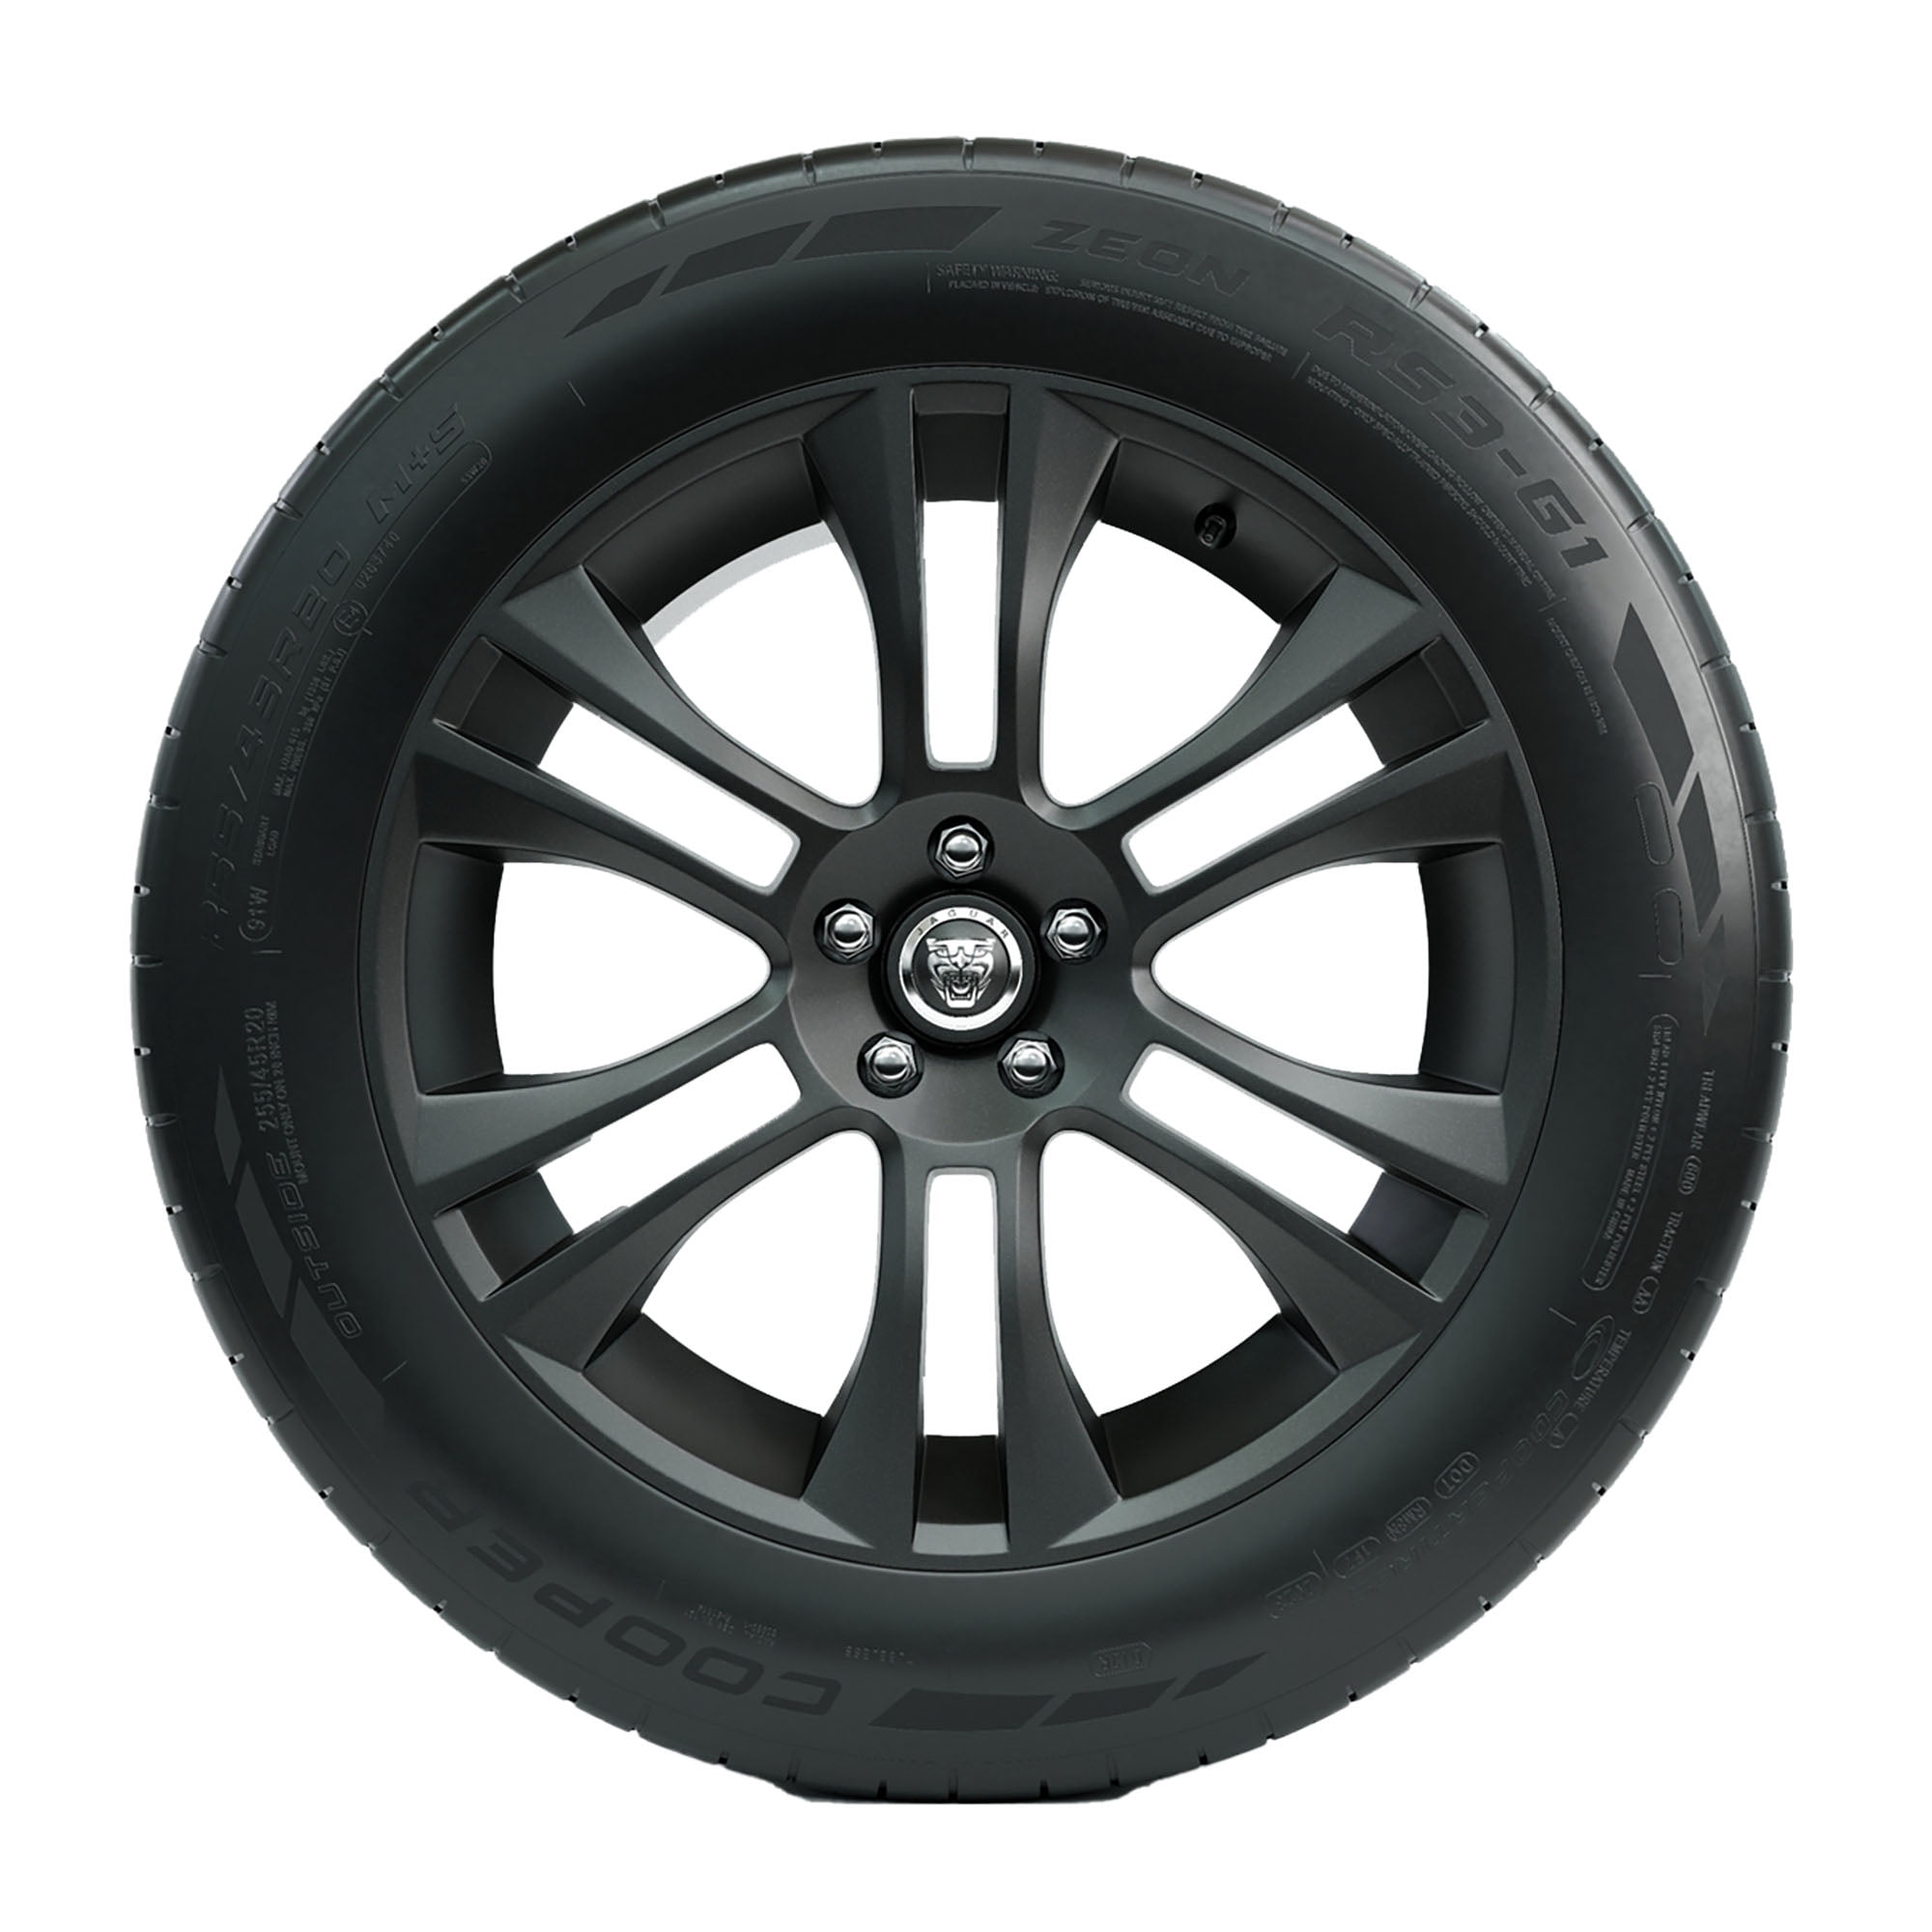 Cooper Zeon RS3 G1 All Season R Y XL Passenger Tire